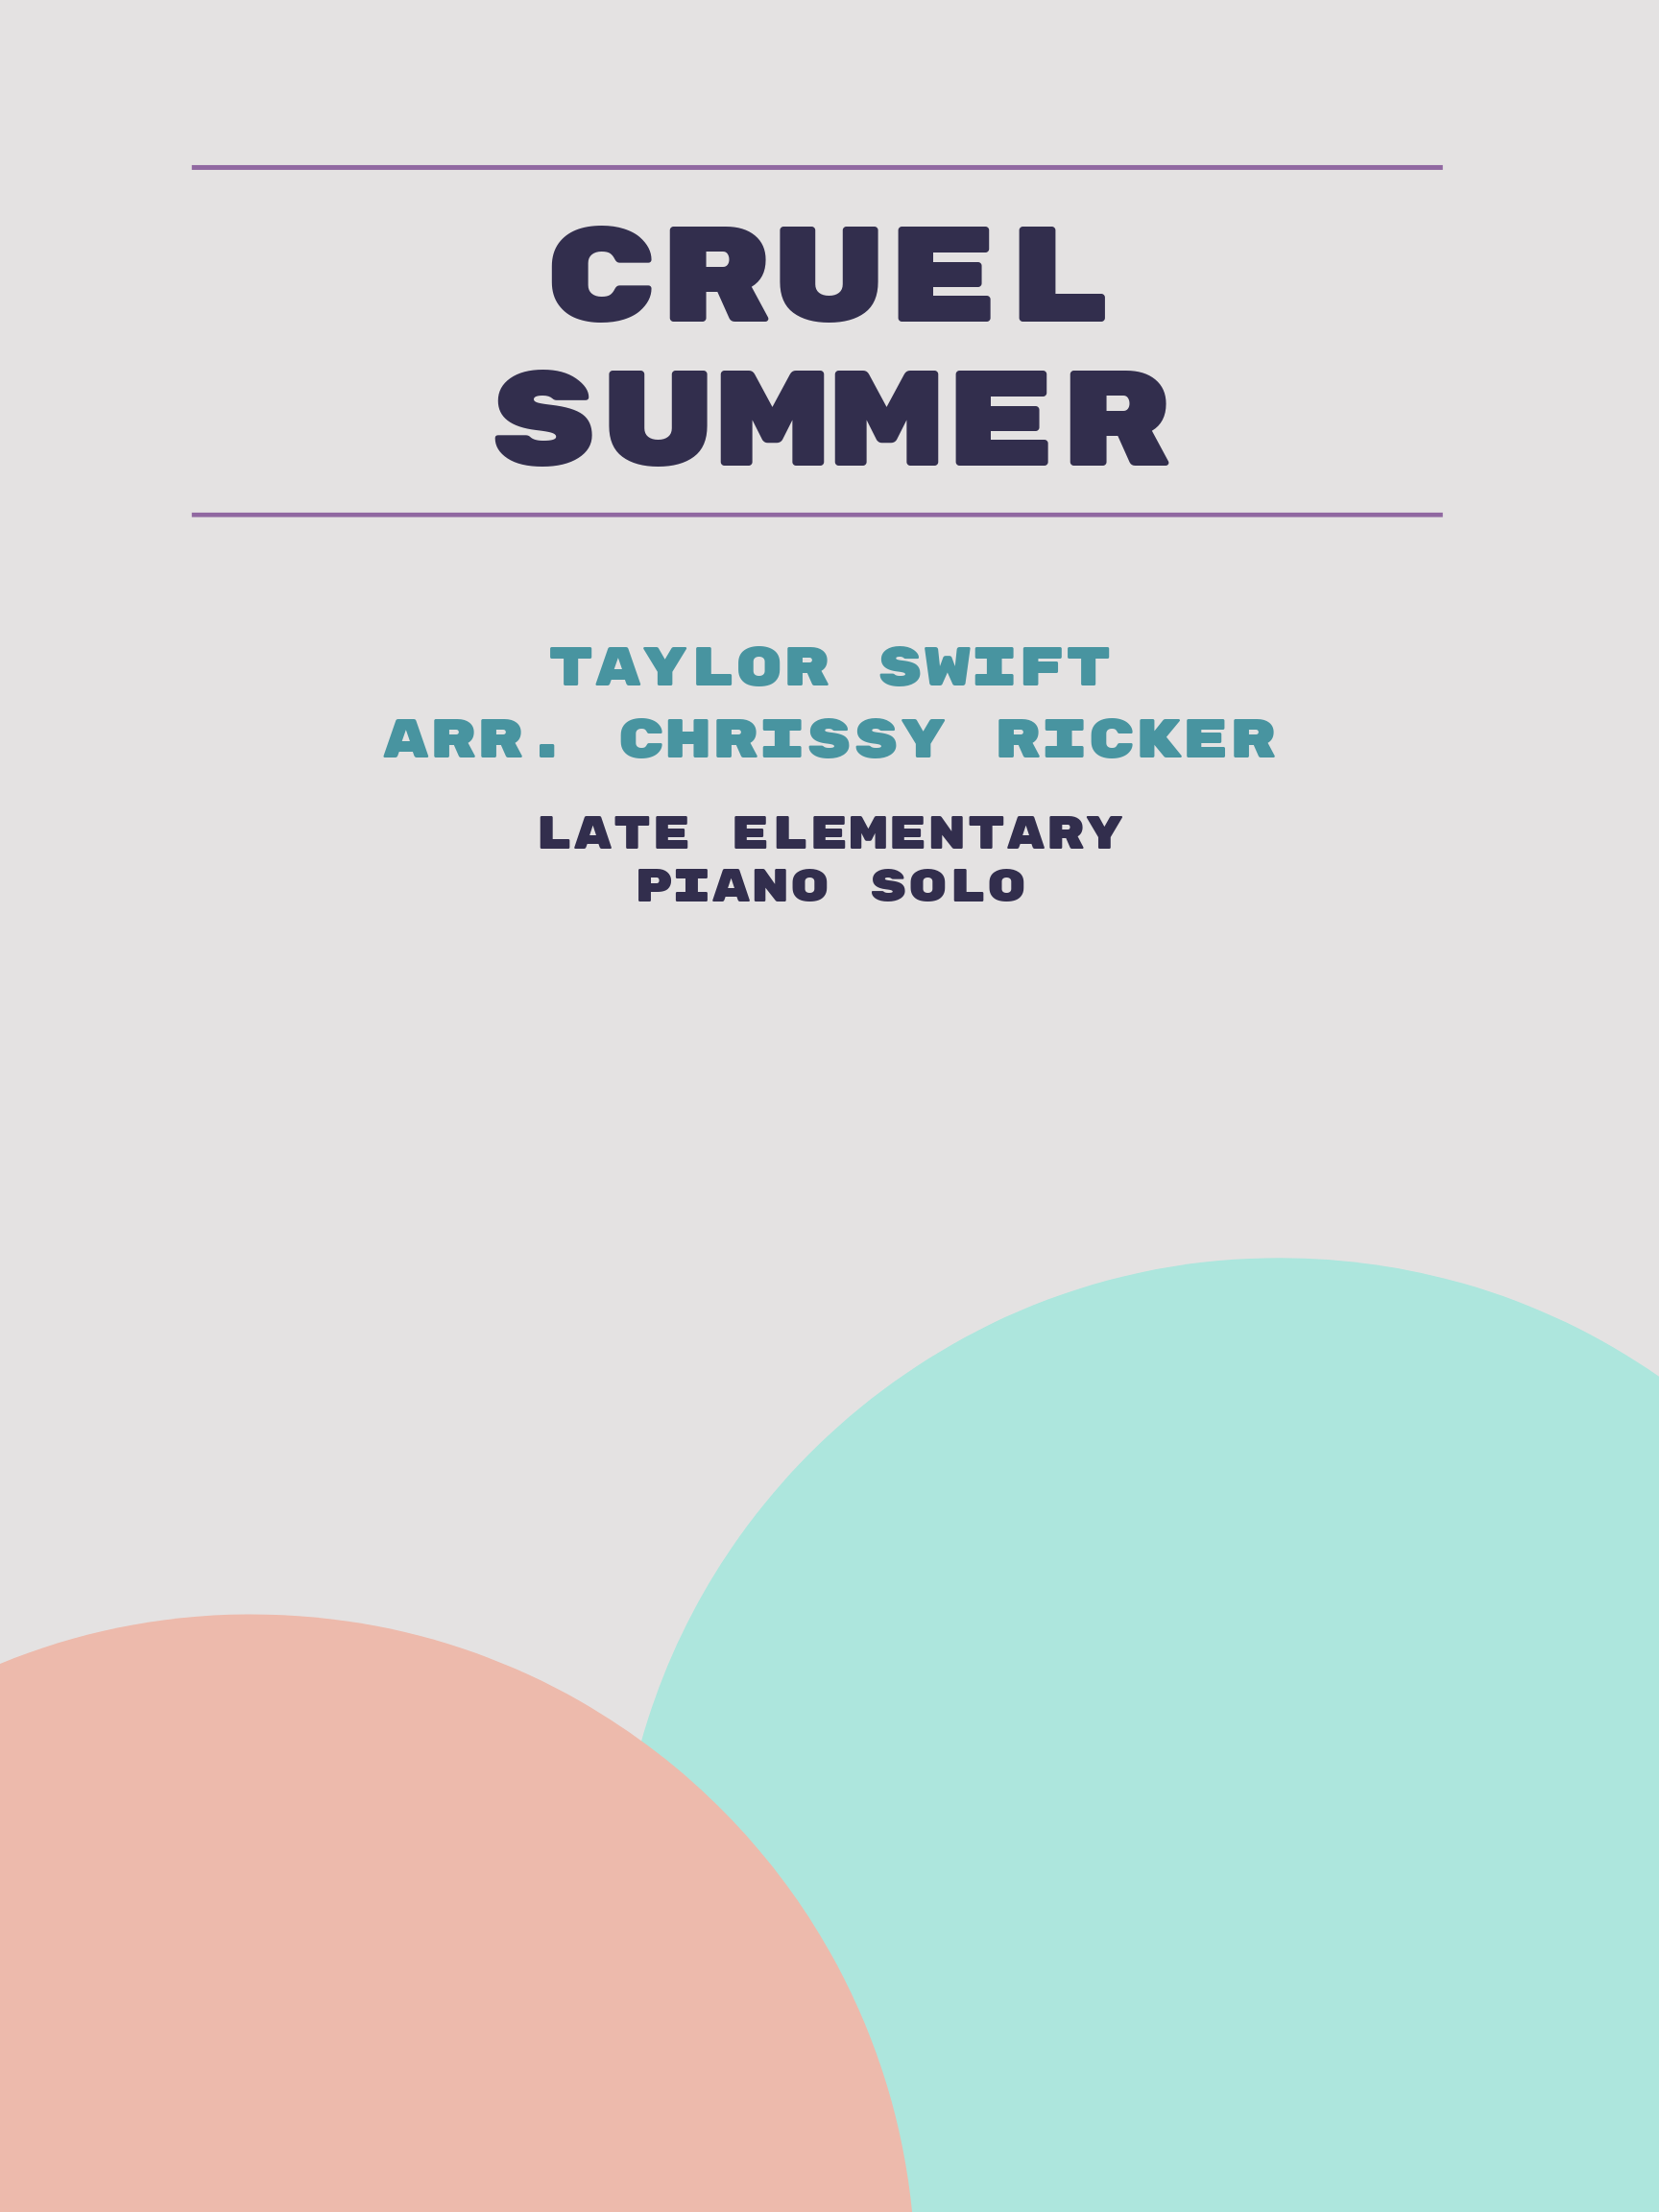 Cruel Summer by Taylor Swift